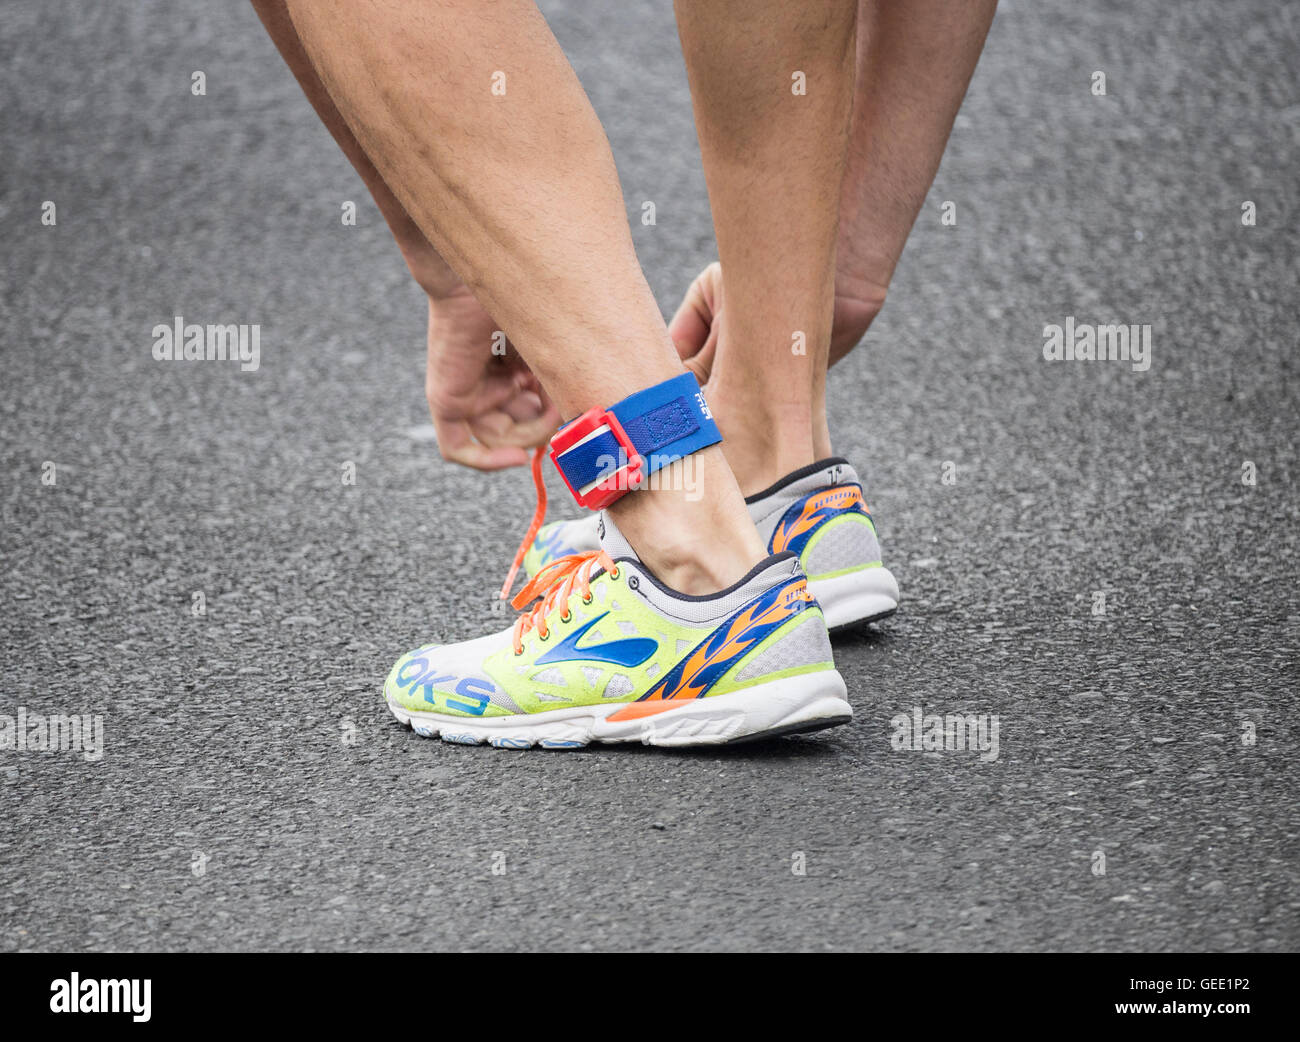 Triatleta vistiendo timing chip/etiqueta en el tobillo. Foto de stock